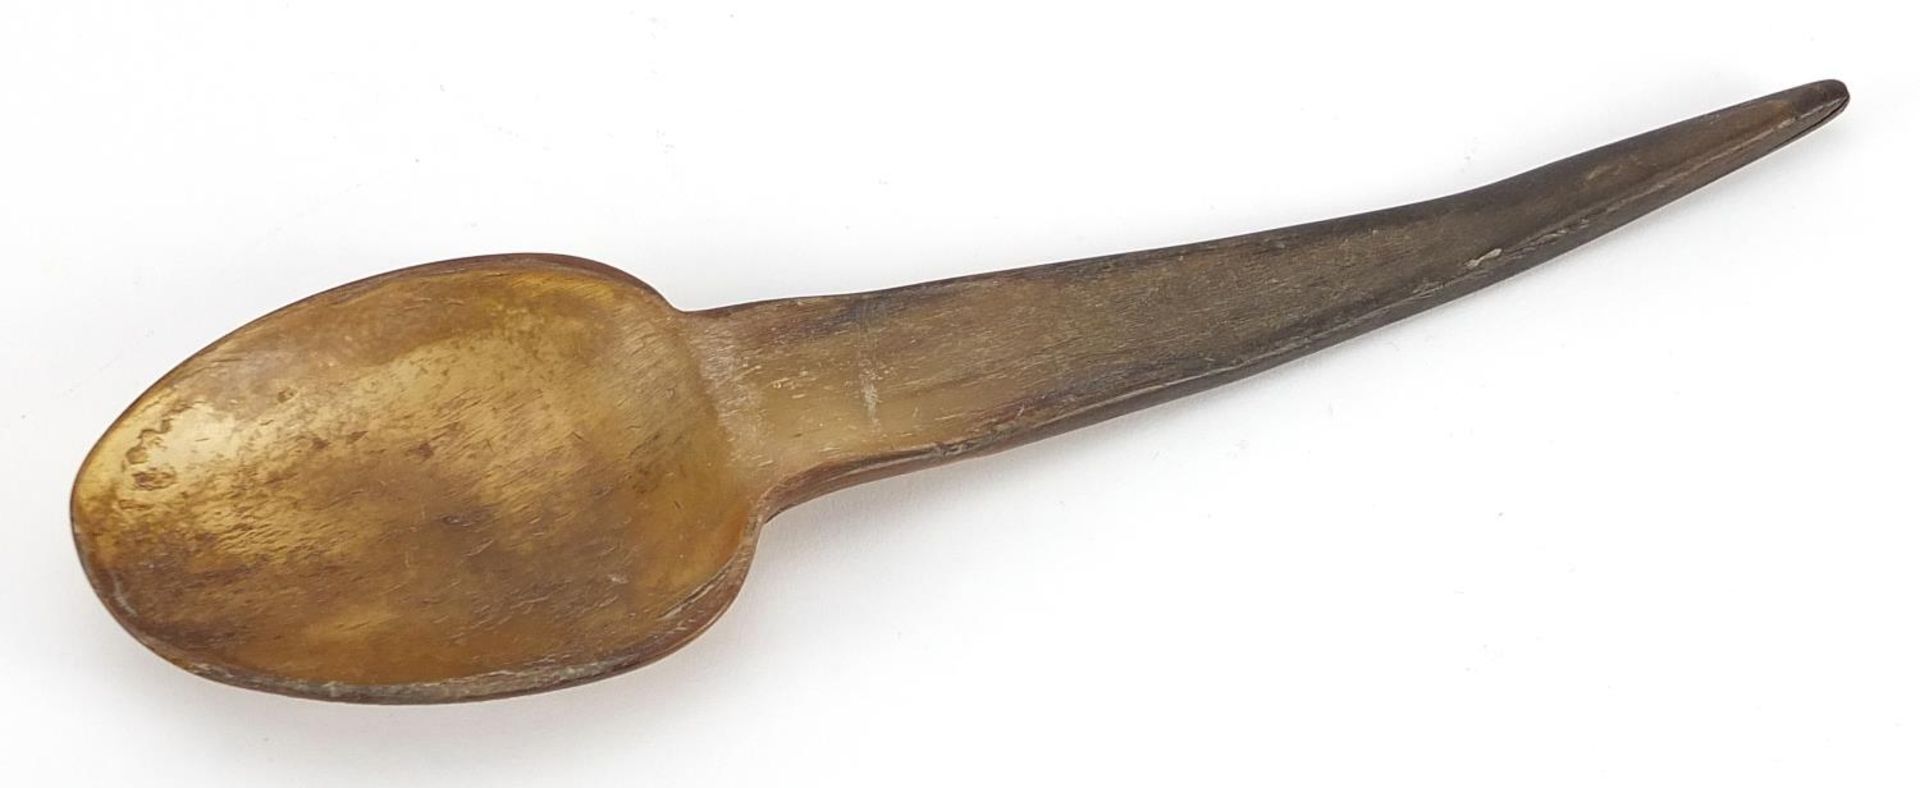 Asian horn spoon, possibly rhinoceros, 22.5cm in length